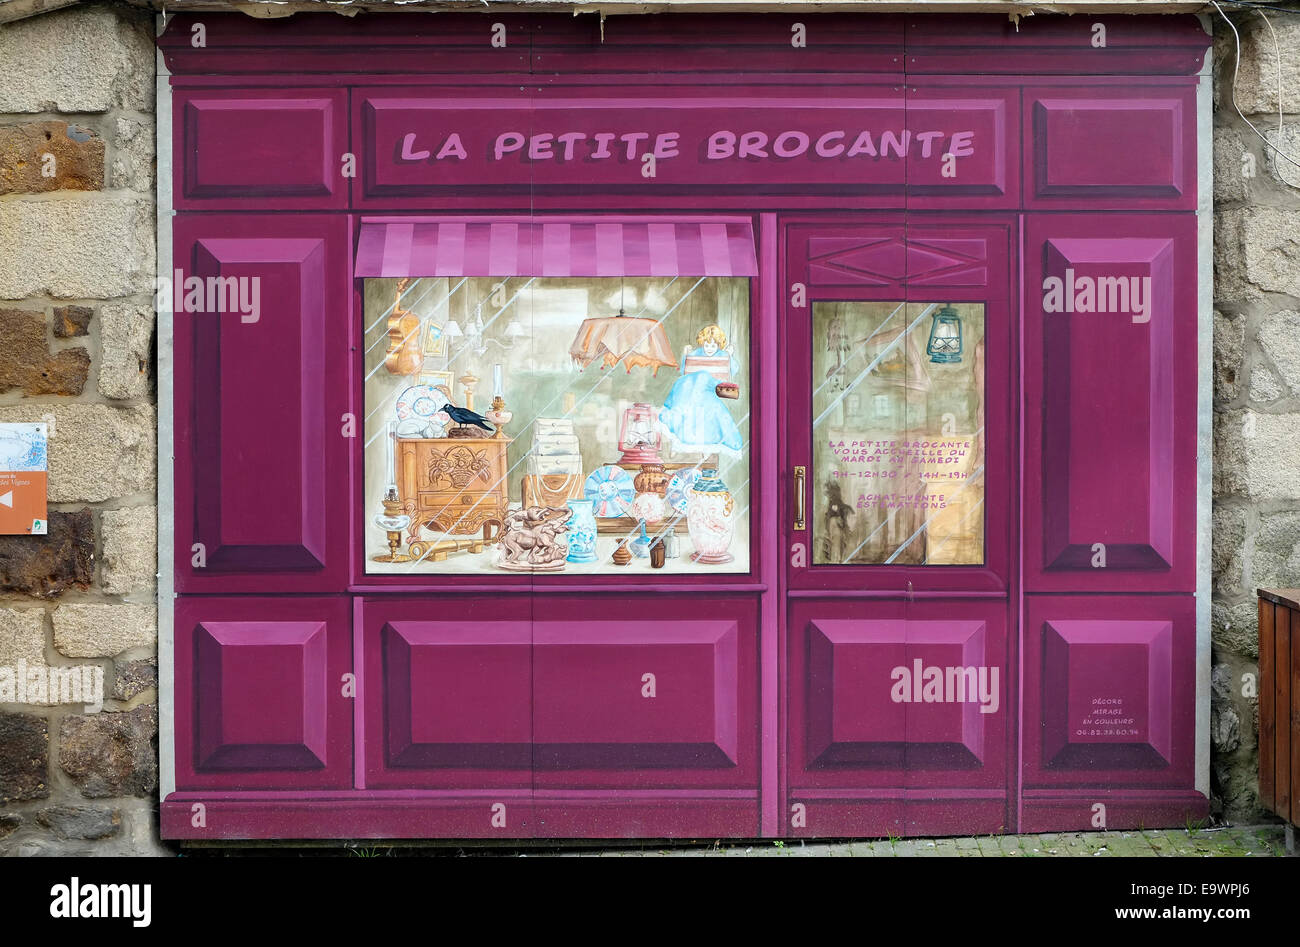 La petite Brocante Shop auf Mauerbau gemalt Stockfoto